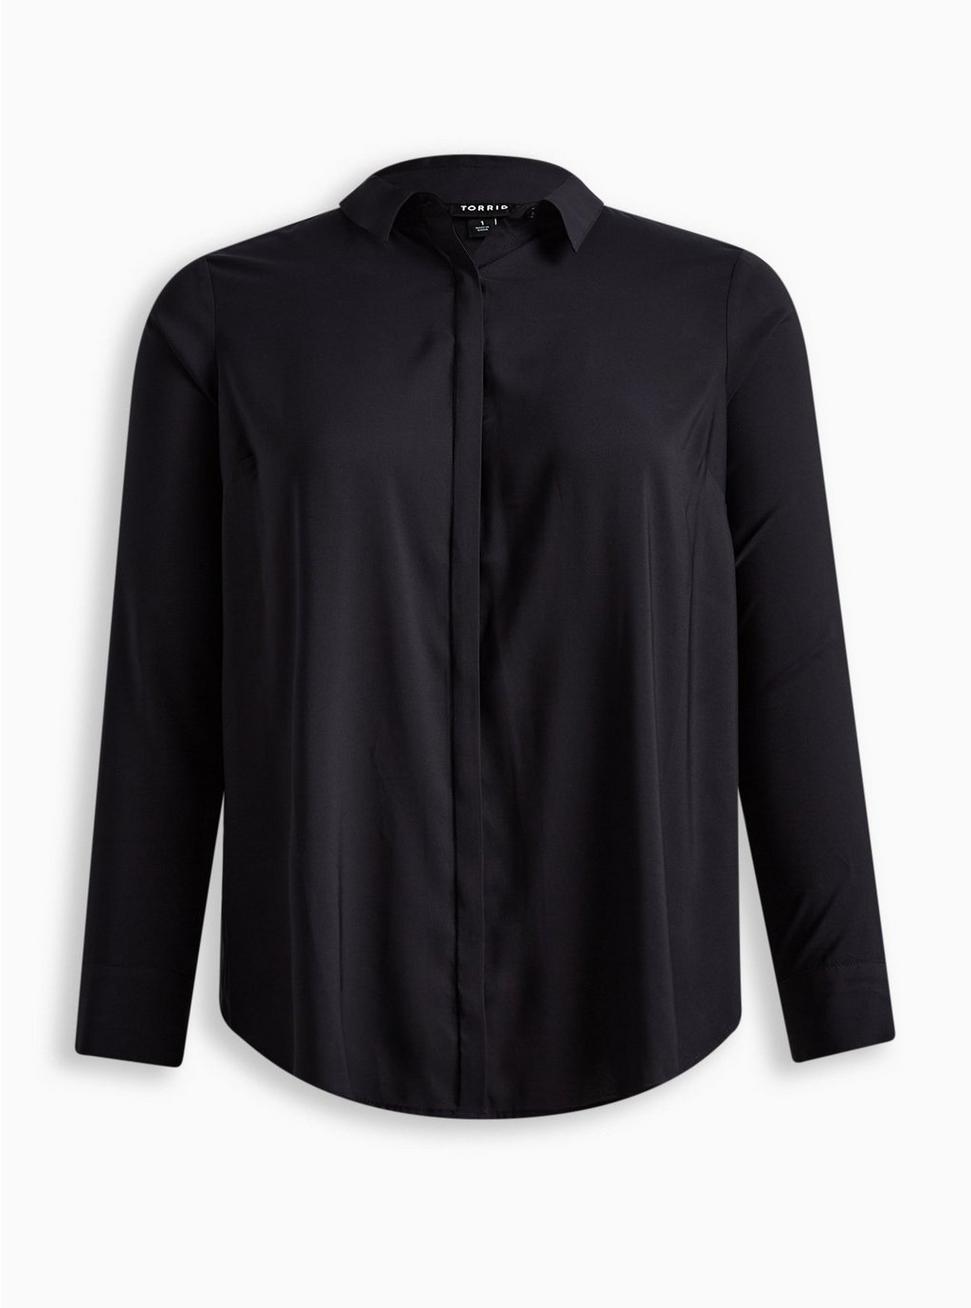 Lizzie Satin Button-Up Tunic Shirt, DEEP BLACK, hi-res